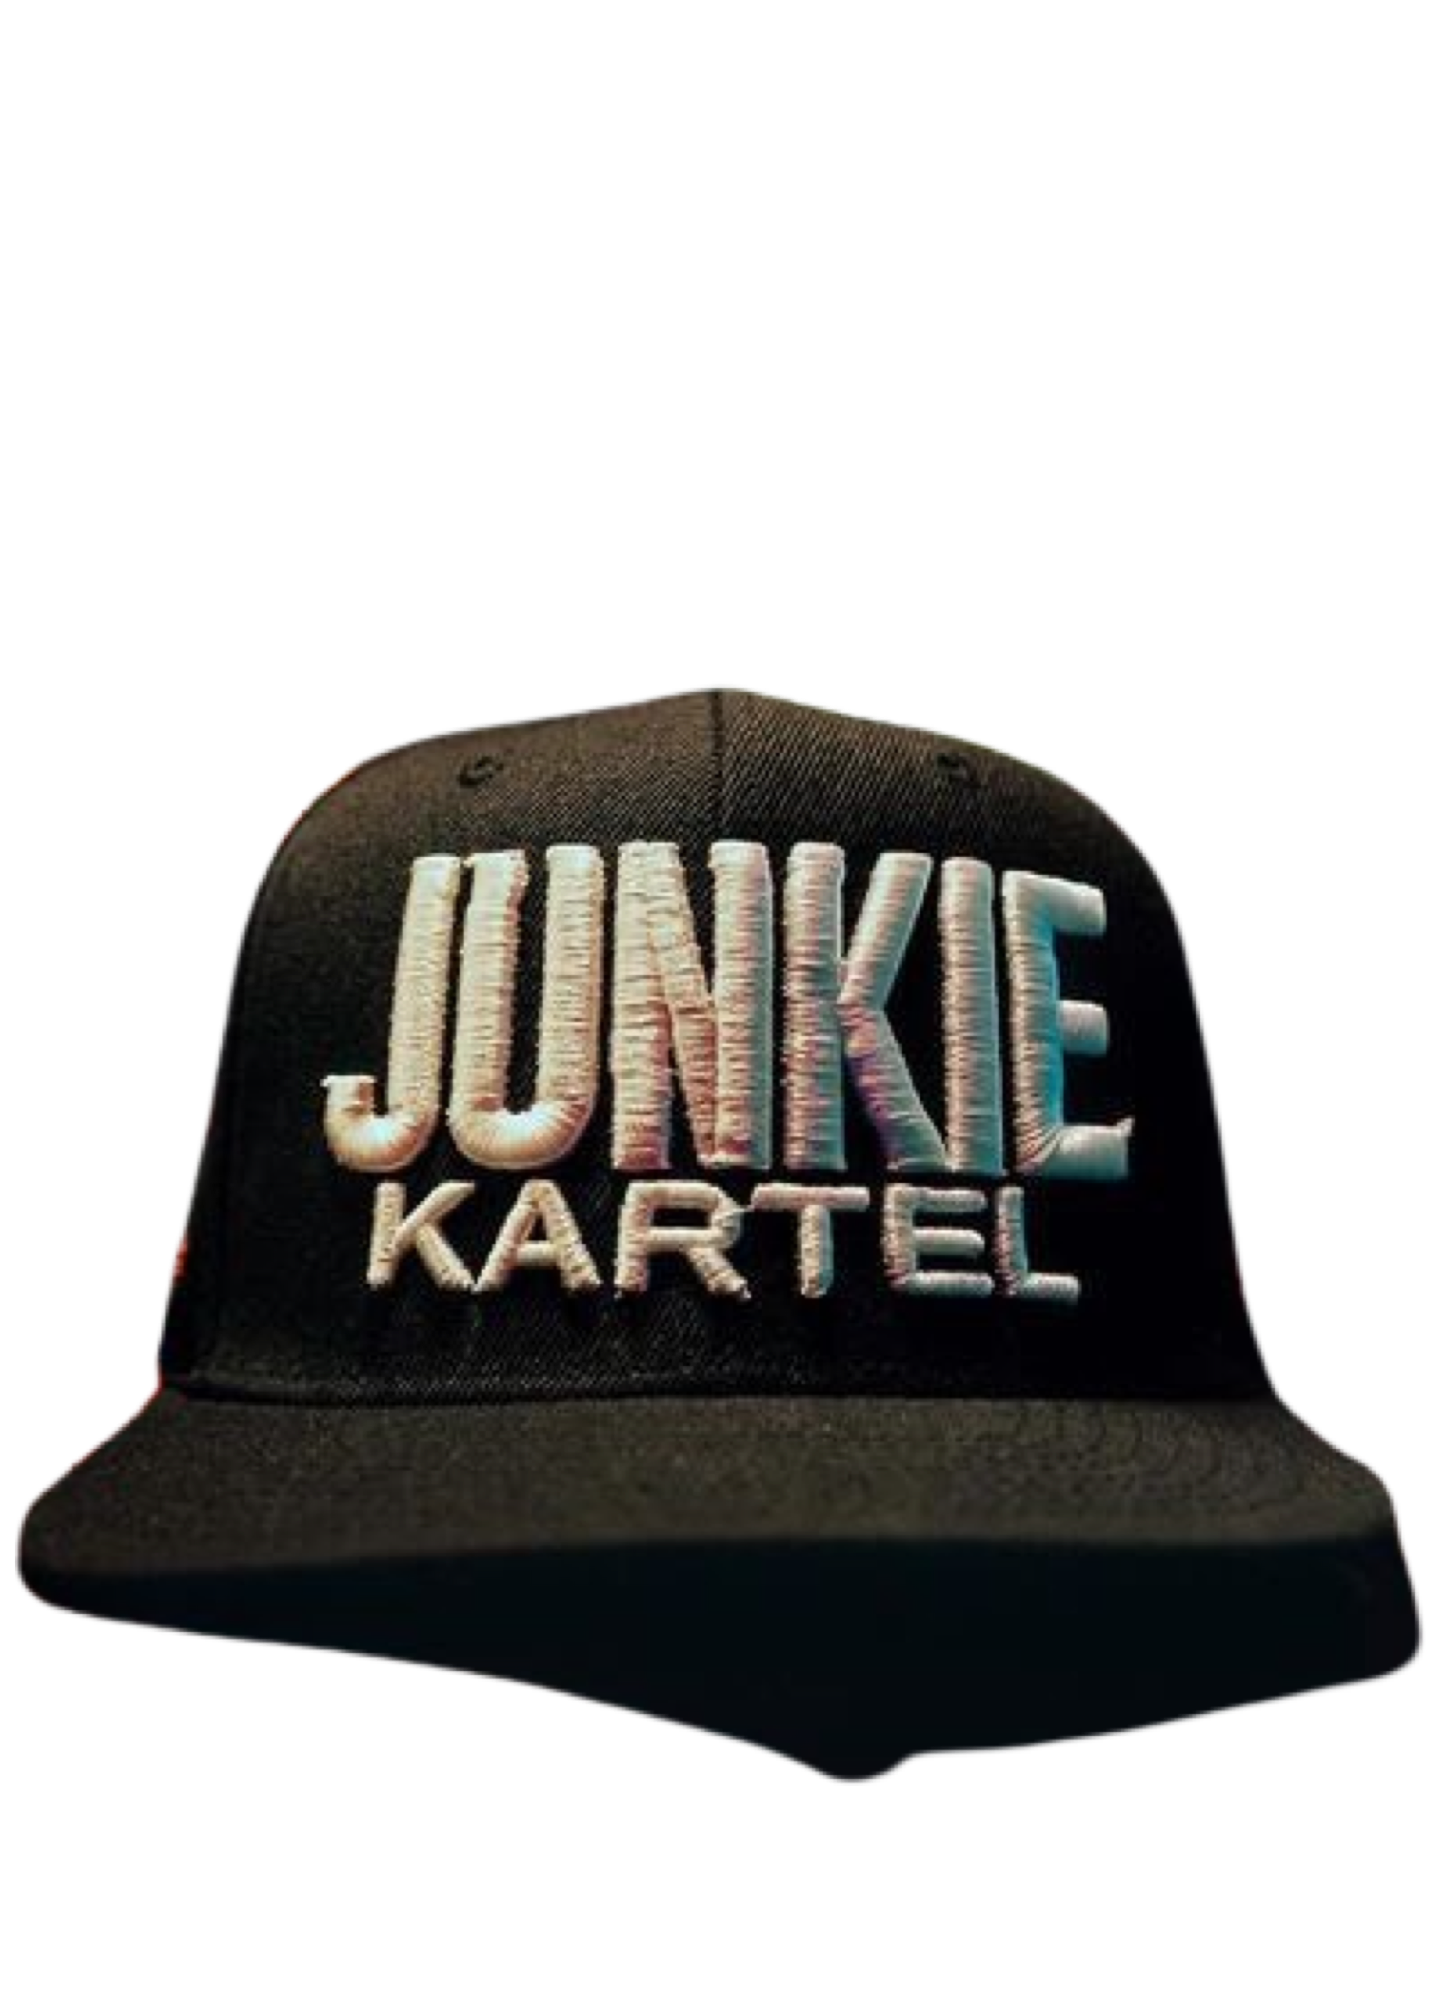 JUNKIE KARTEL S3 HAT